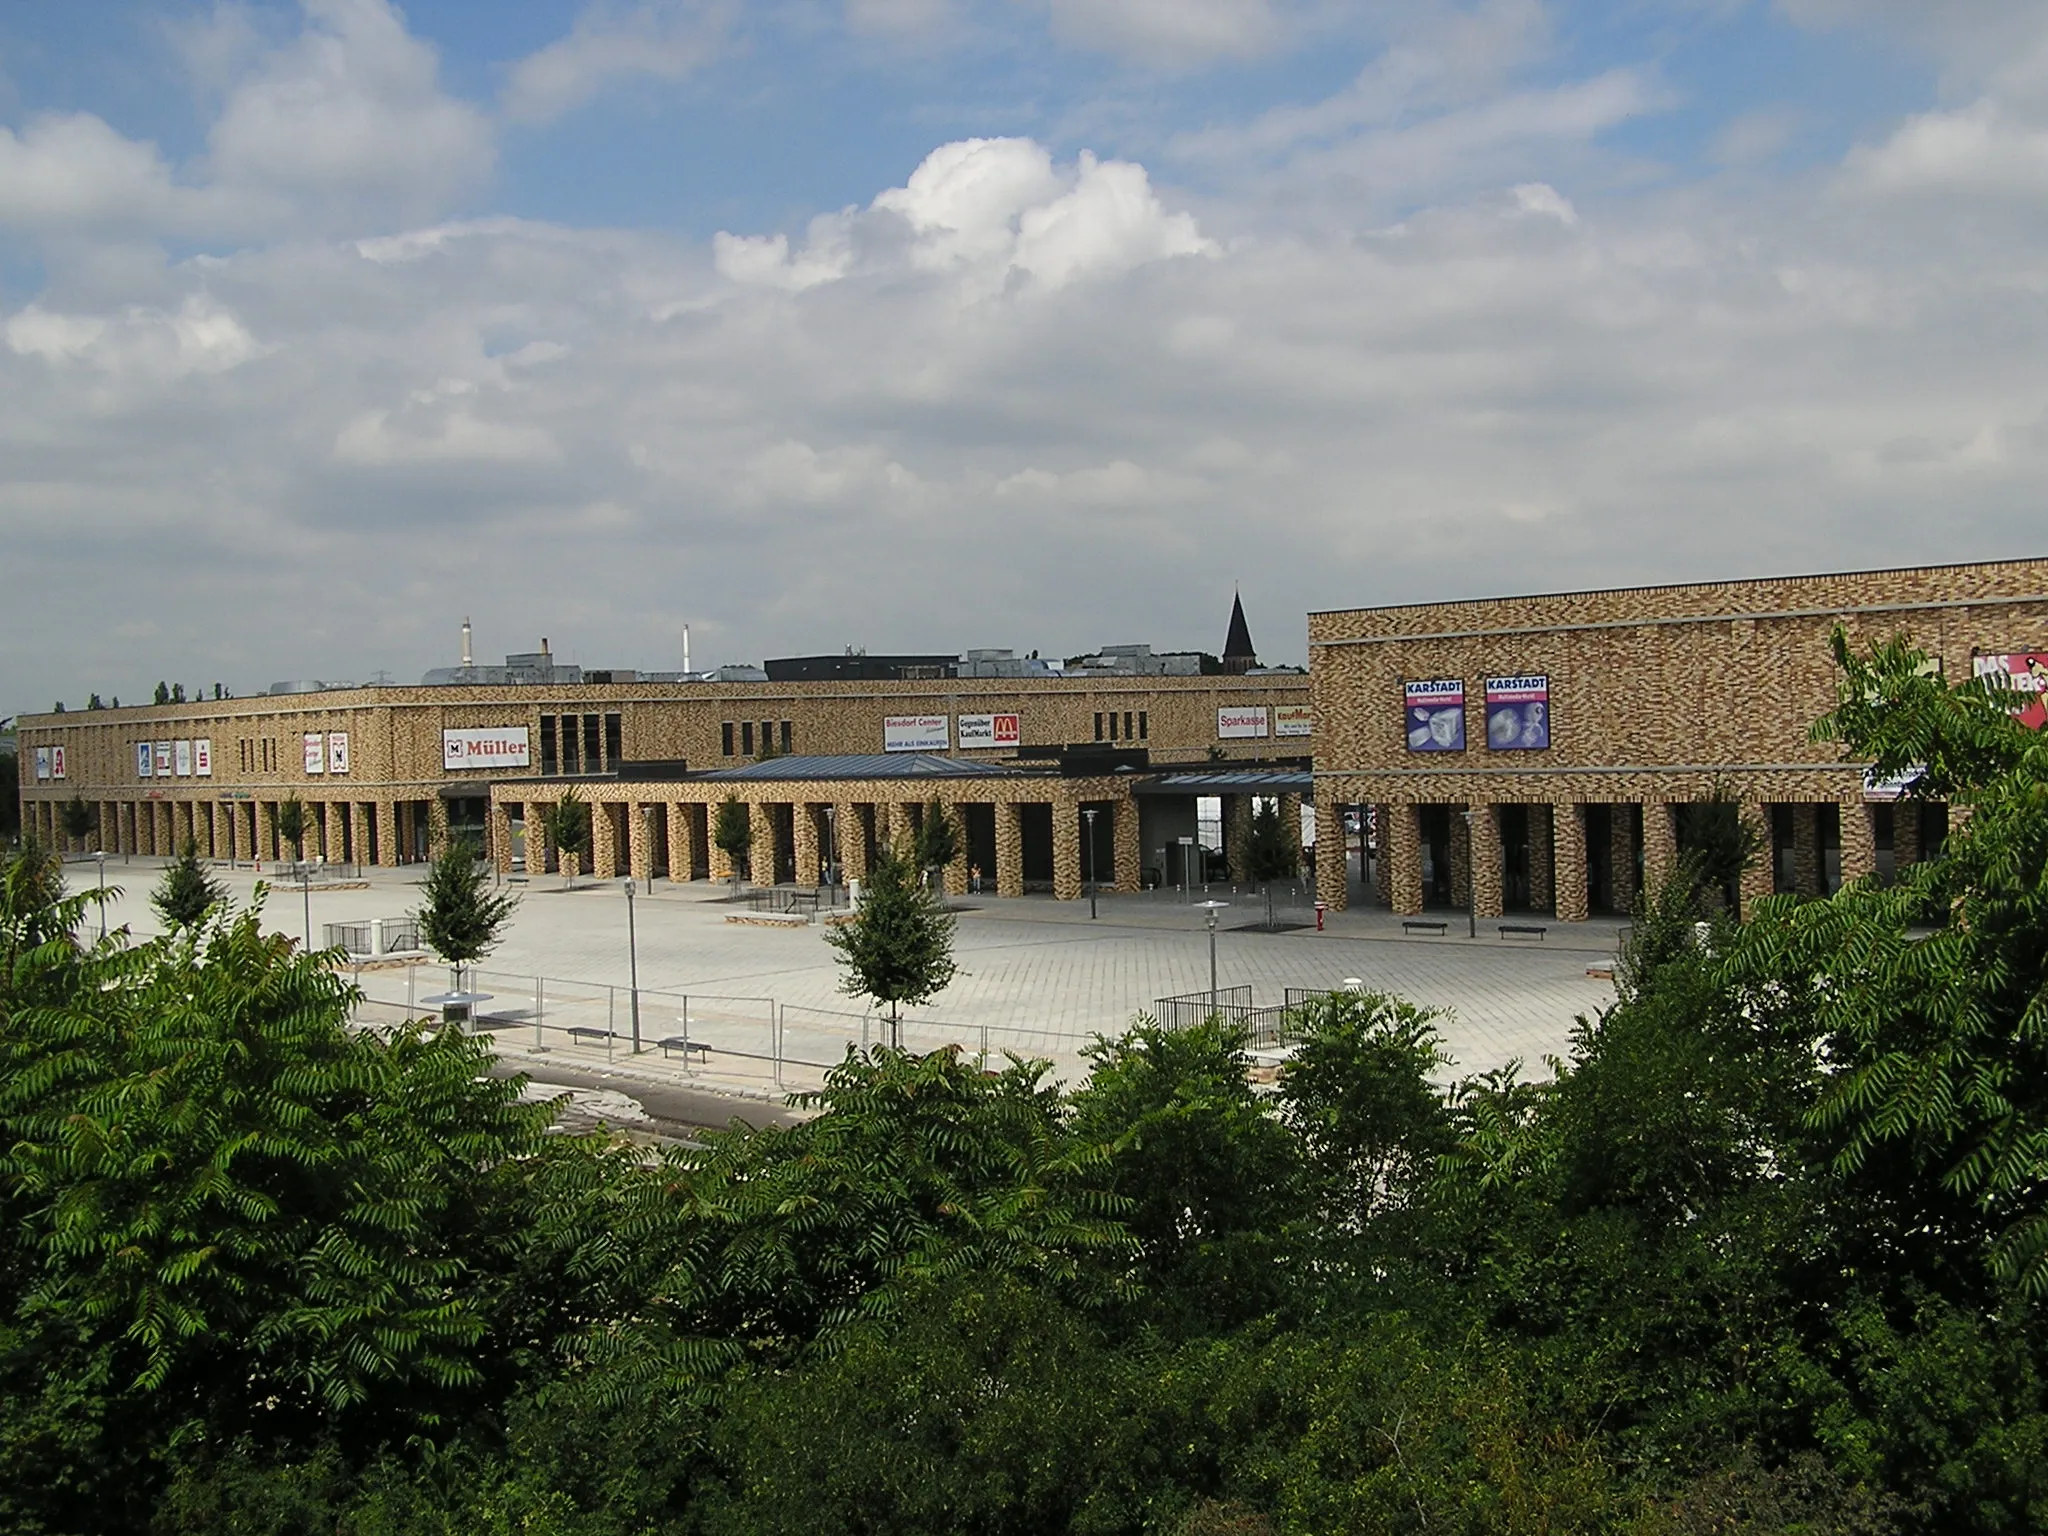 Image of Biesdorf